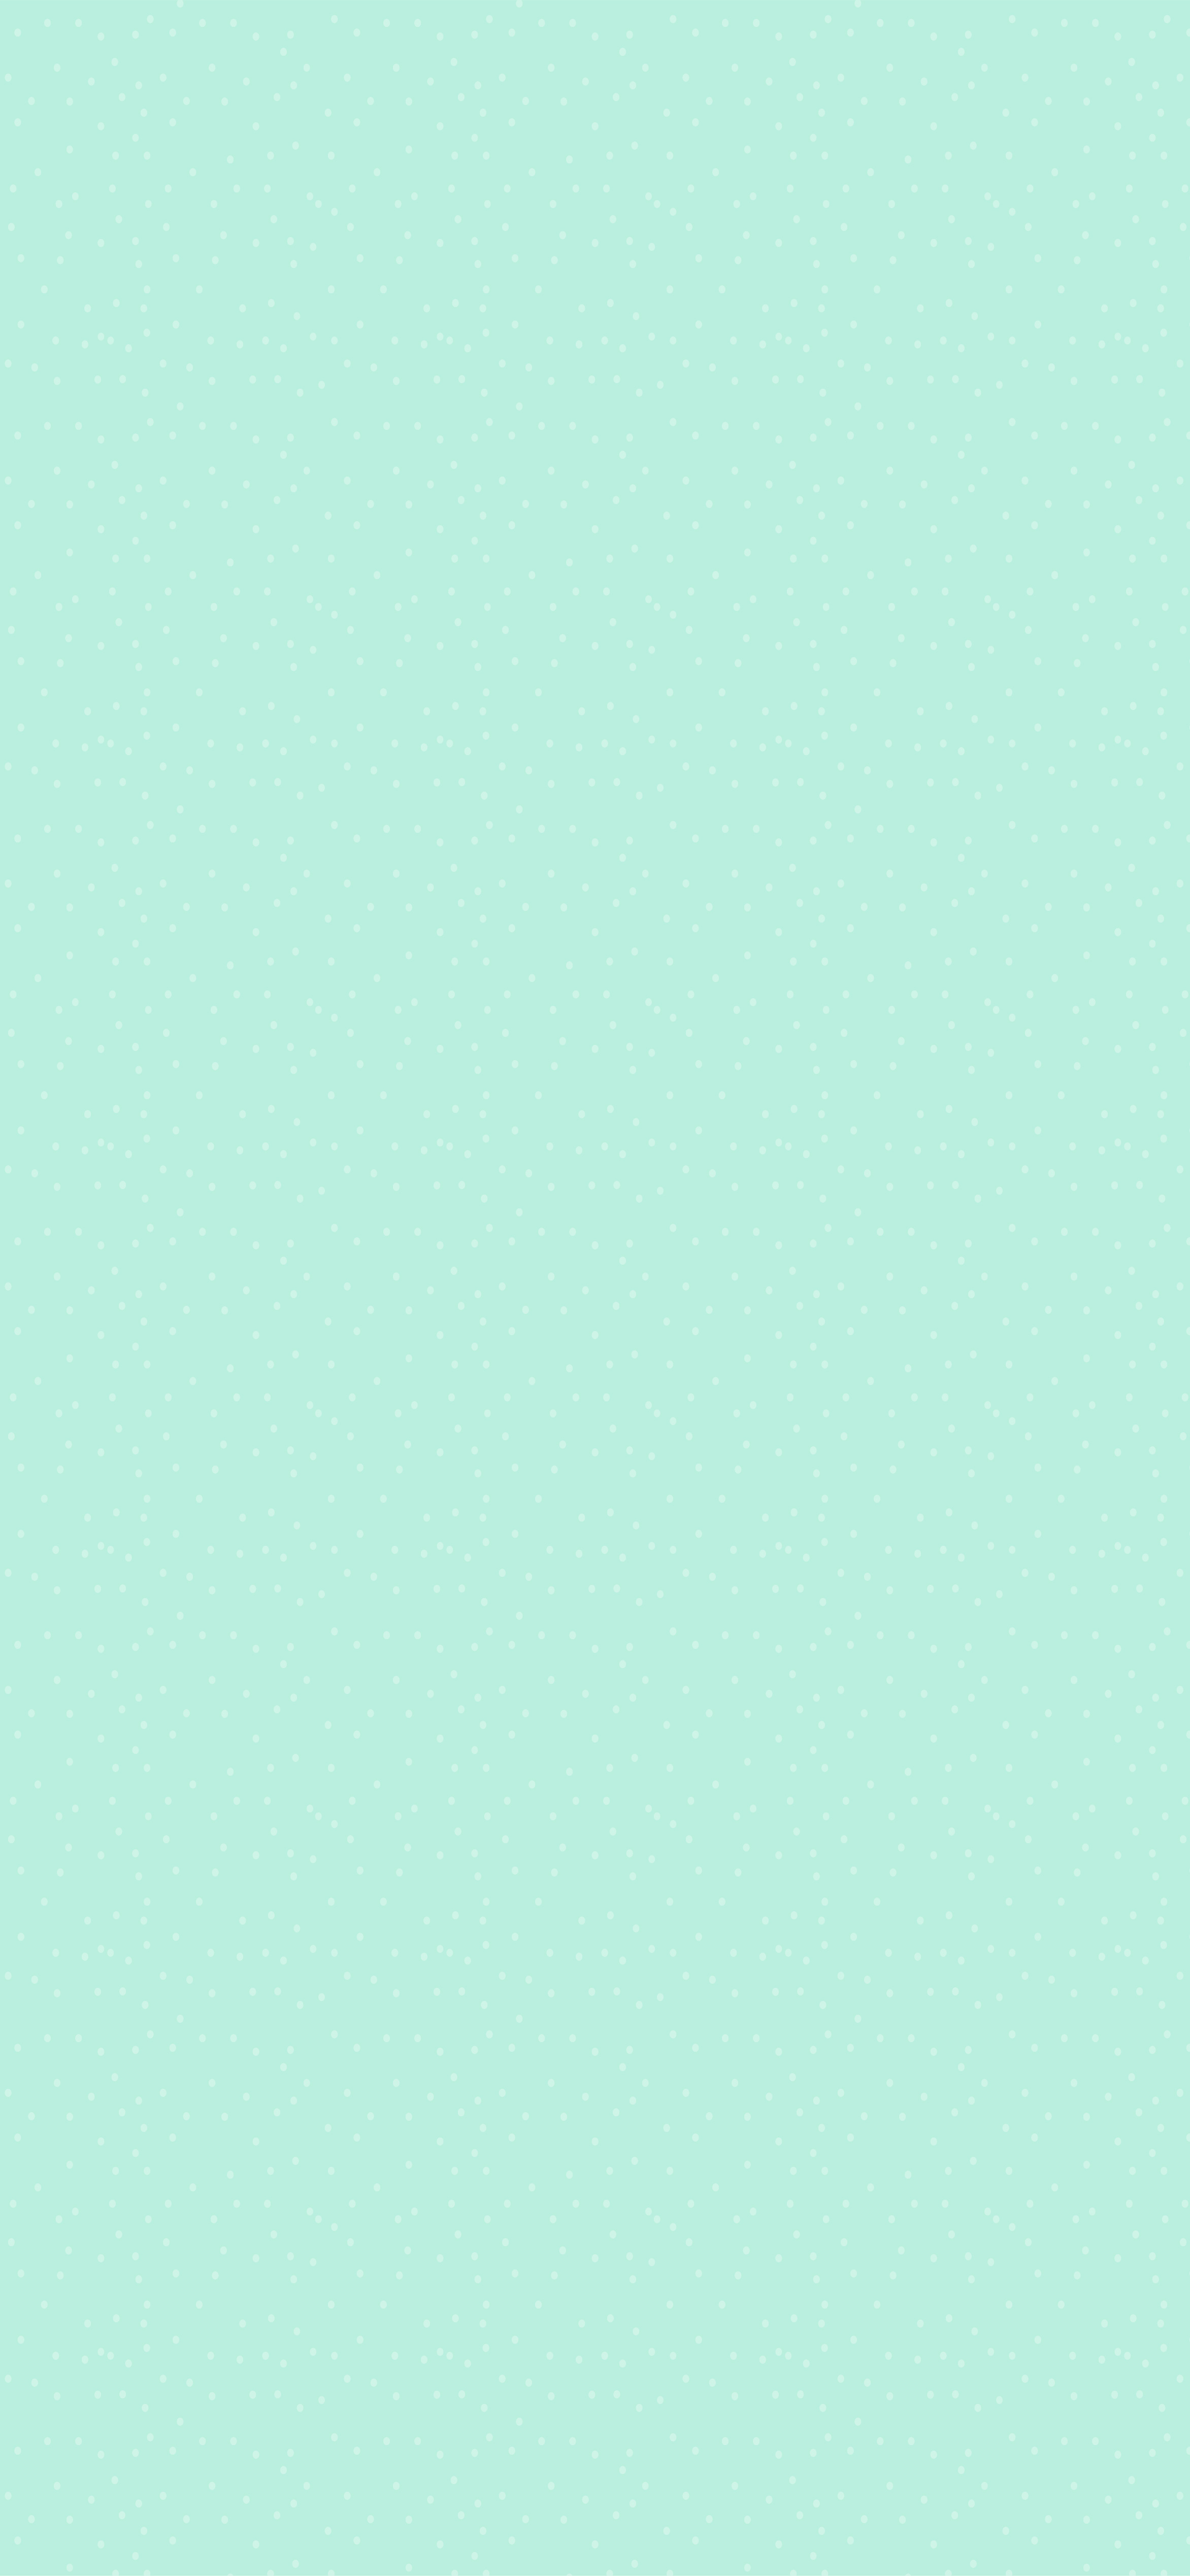 startbildschirm hintergrundbild,grün,aqua,blau,türkis,blaugrün